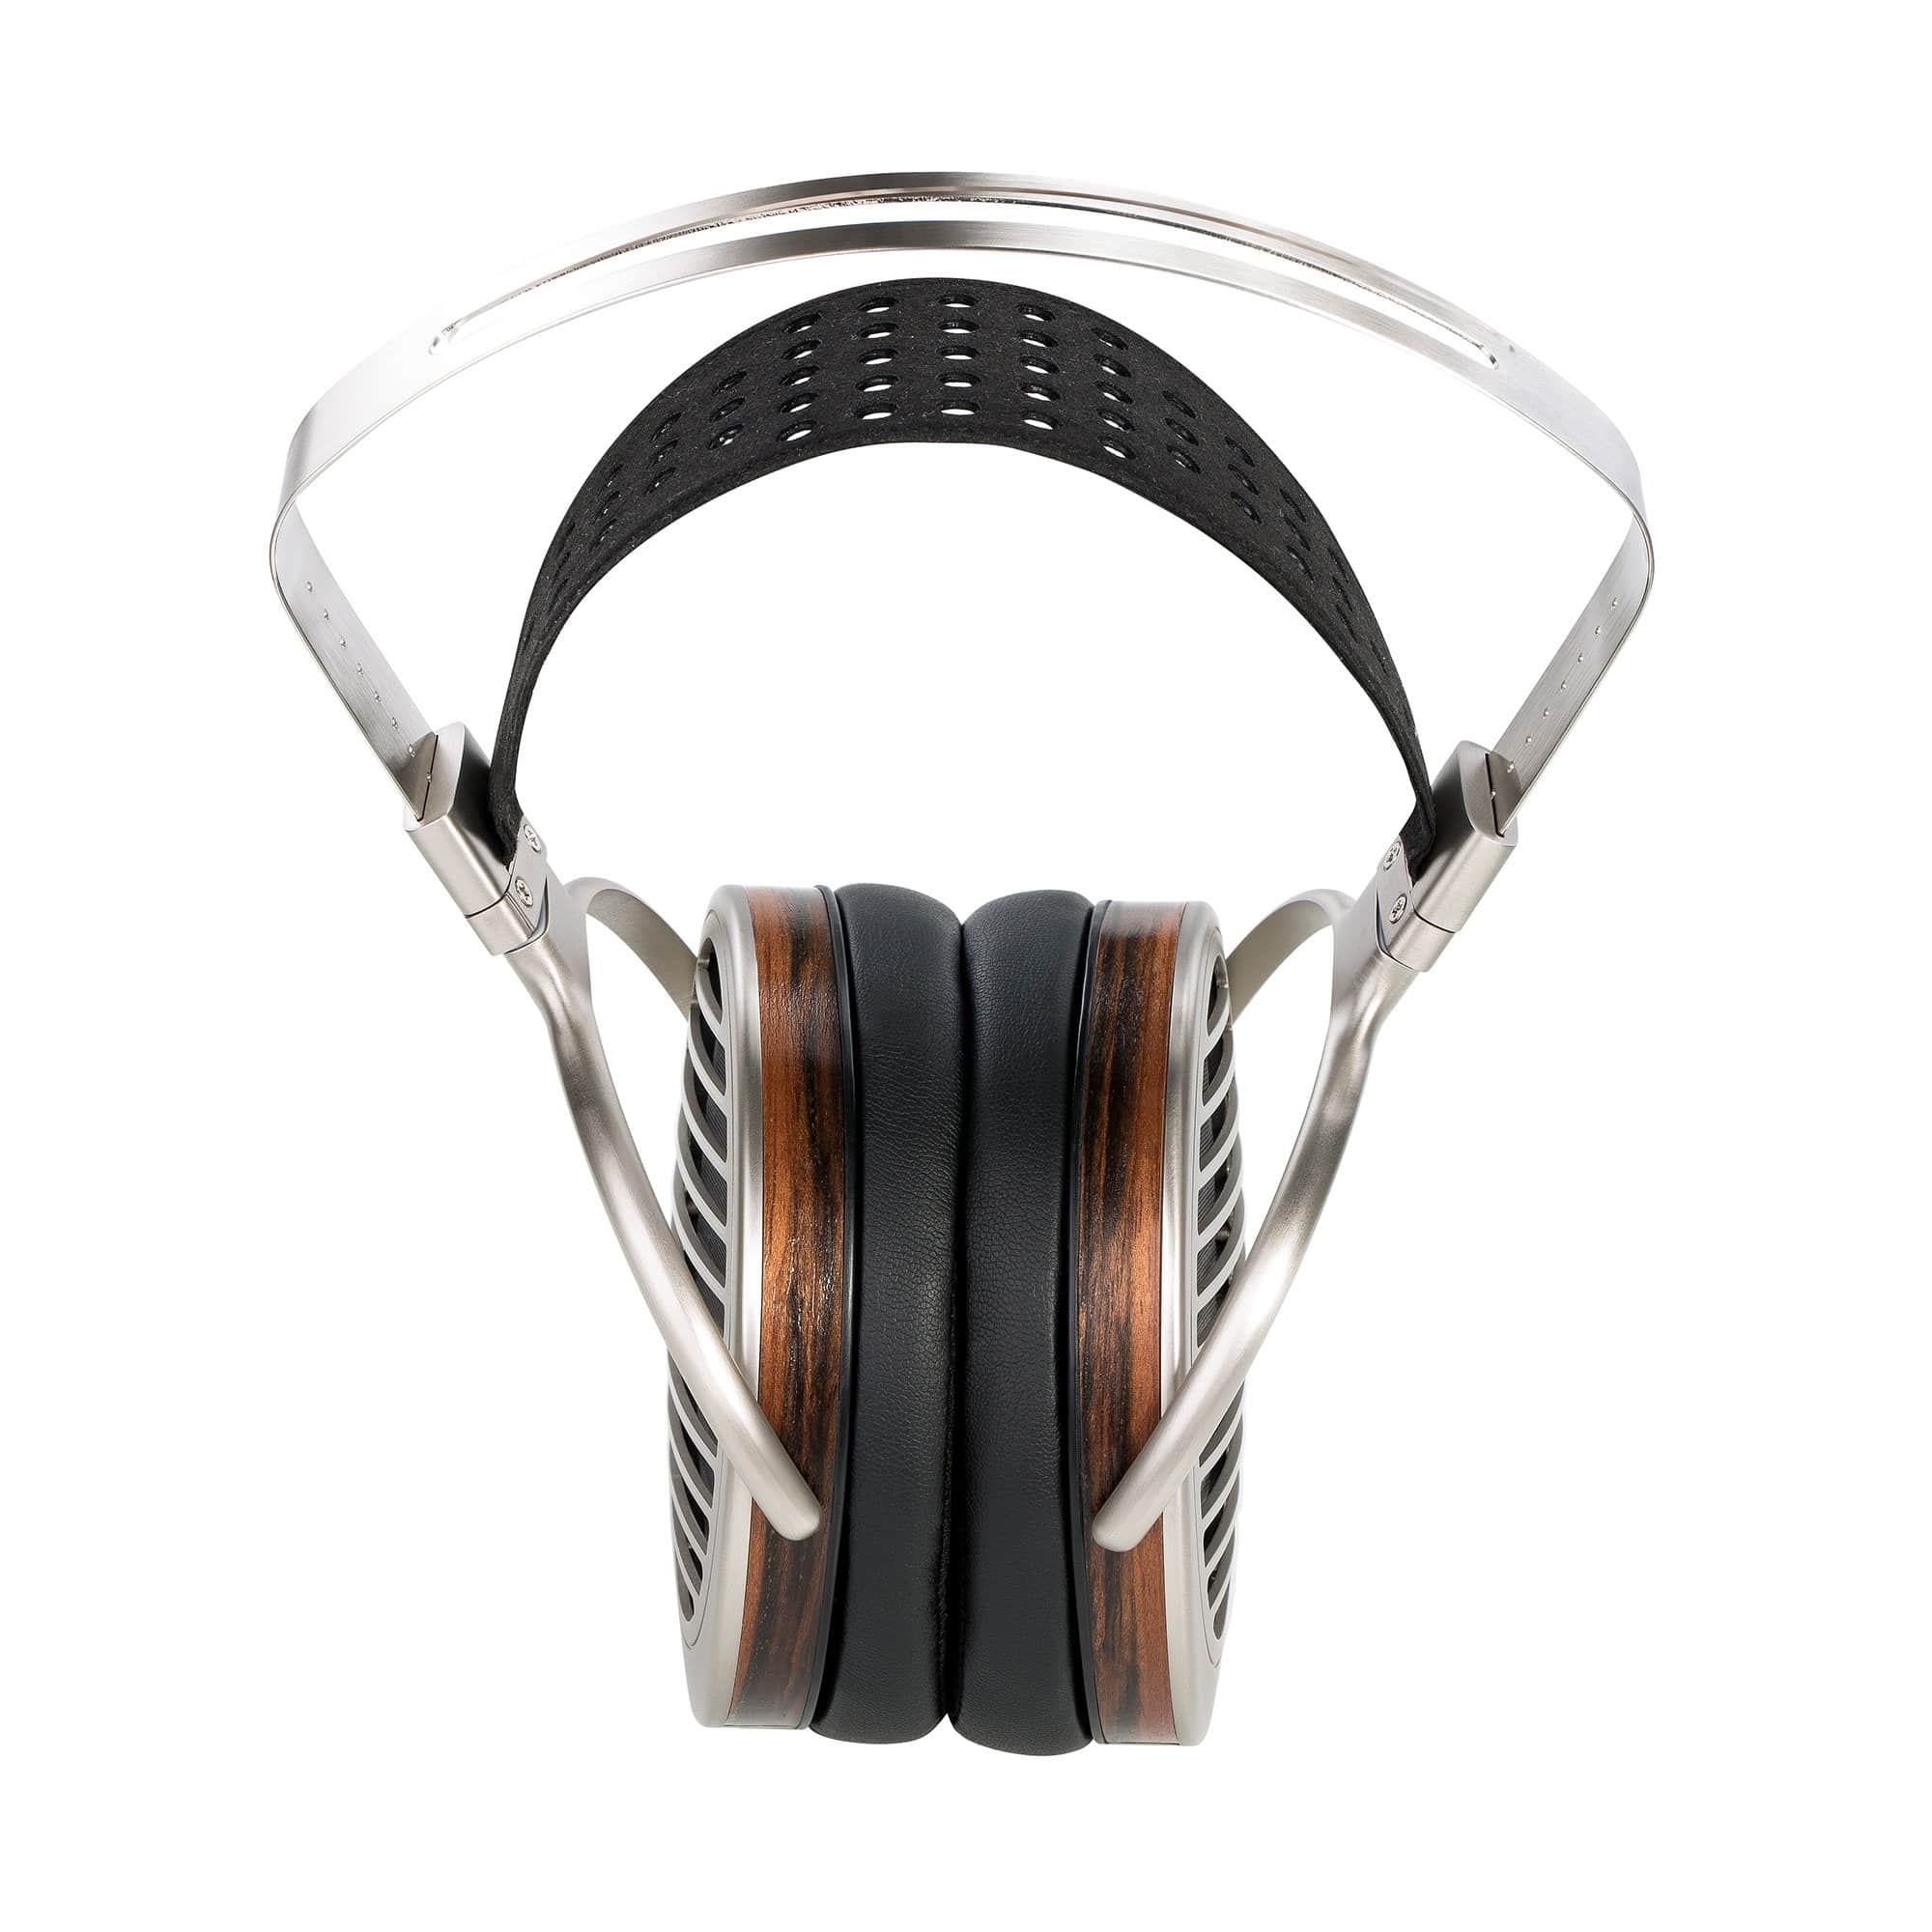 Audio Experience At Home Program - HiFiMAN SUSVARA Planar Magnetic Headphone